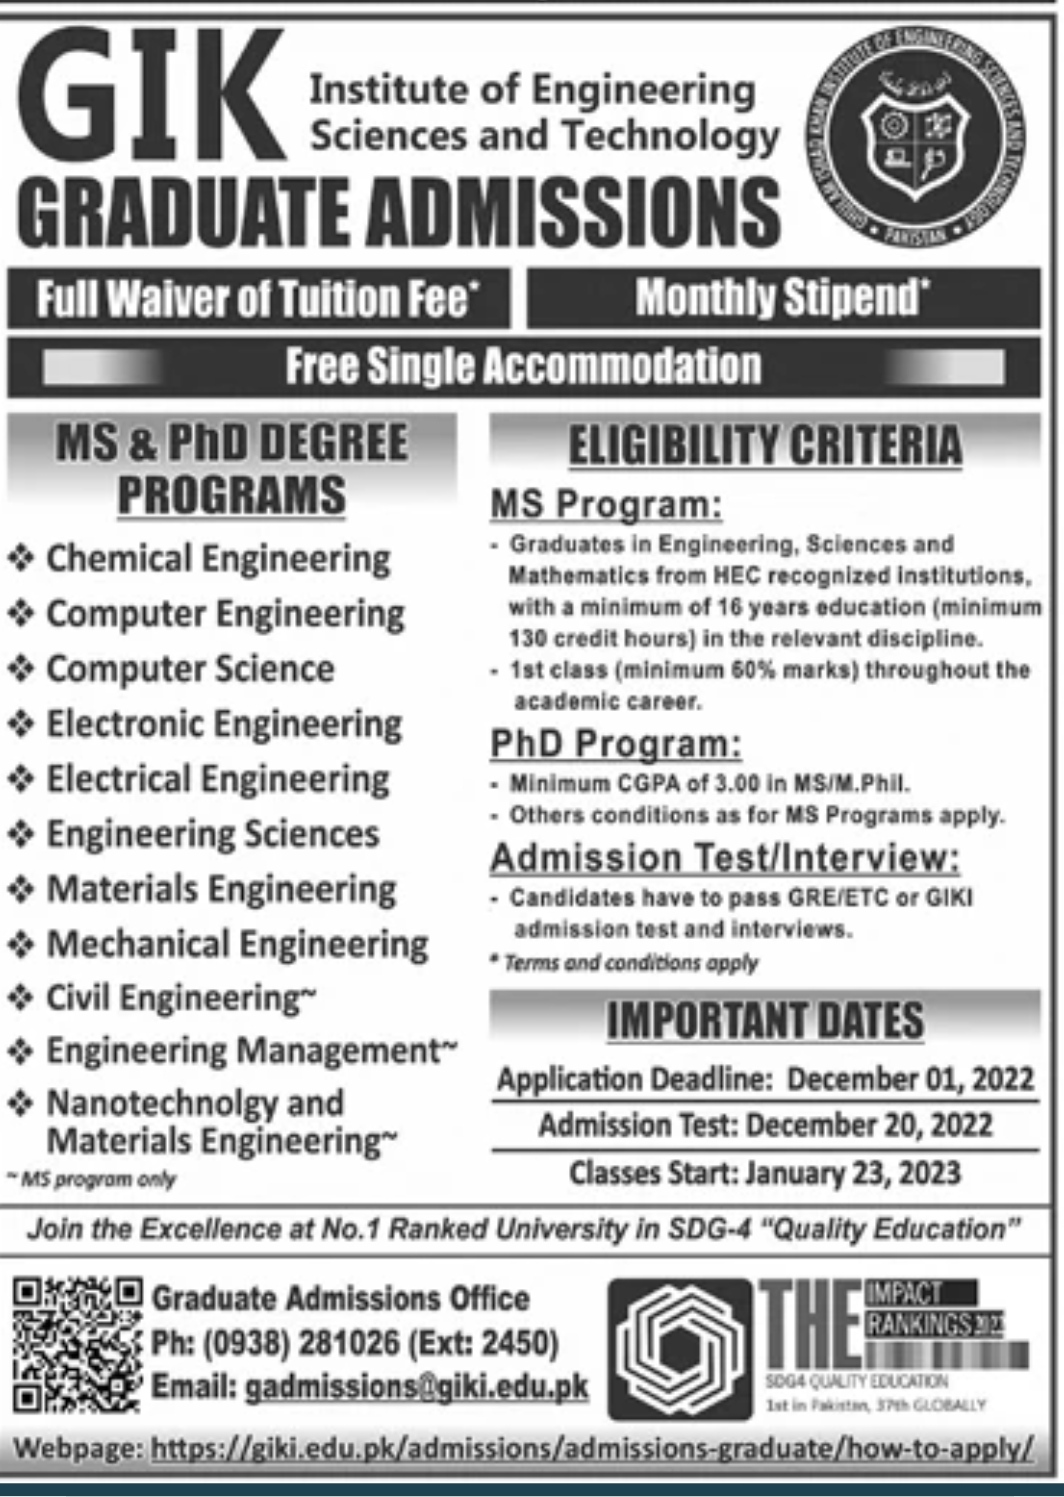 Giki,admissions,admission-in-kpk,graduate admissions,PhD,MS,MPHIL,October,2022, engineering admissions, phd in engineering, ms in engineering in kpk,